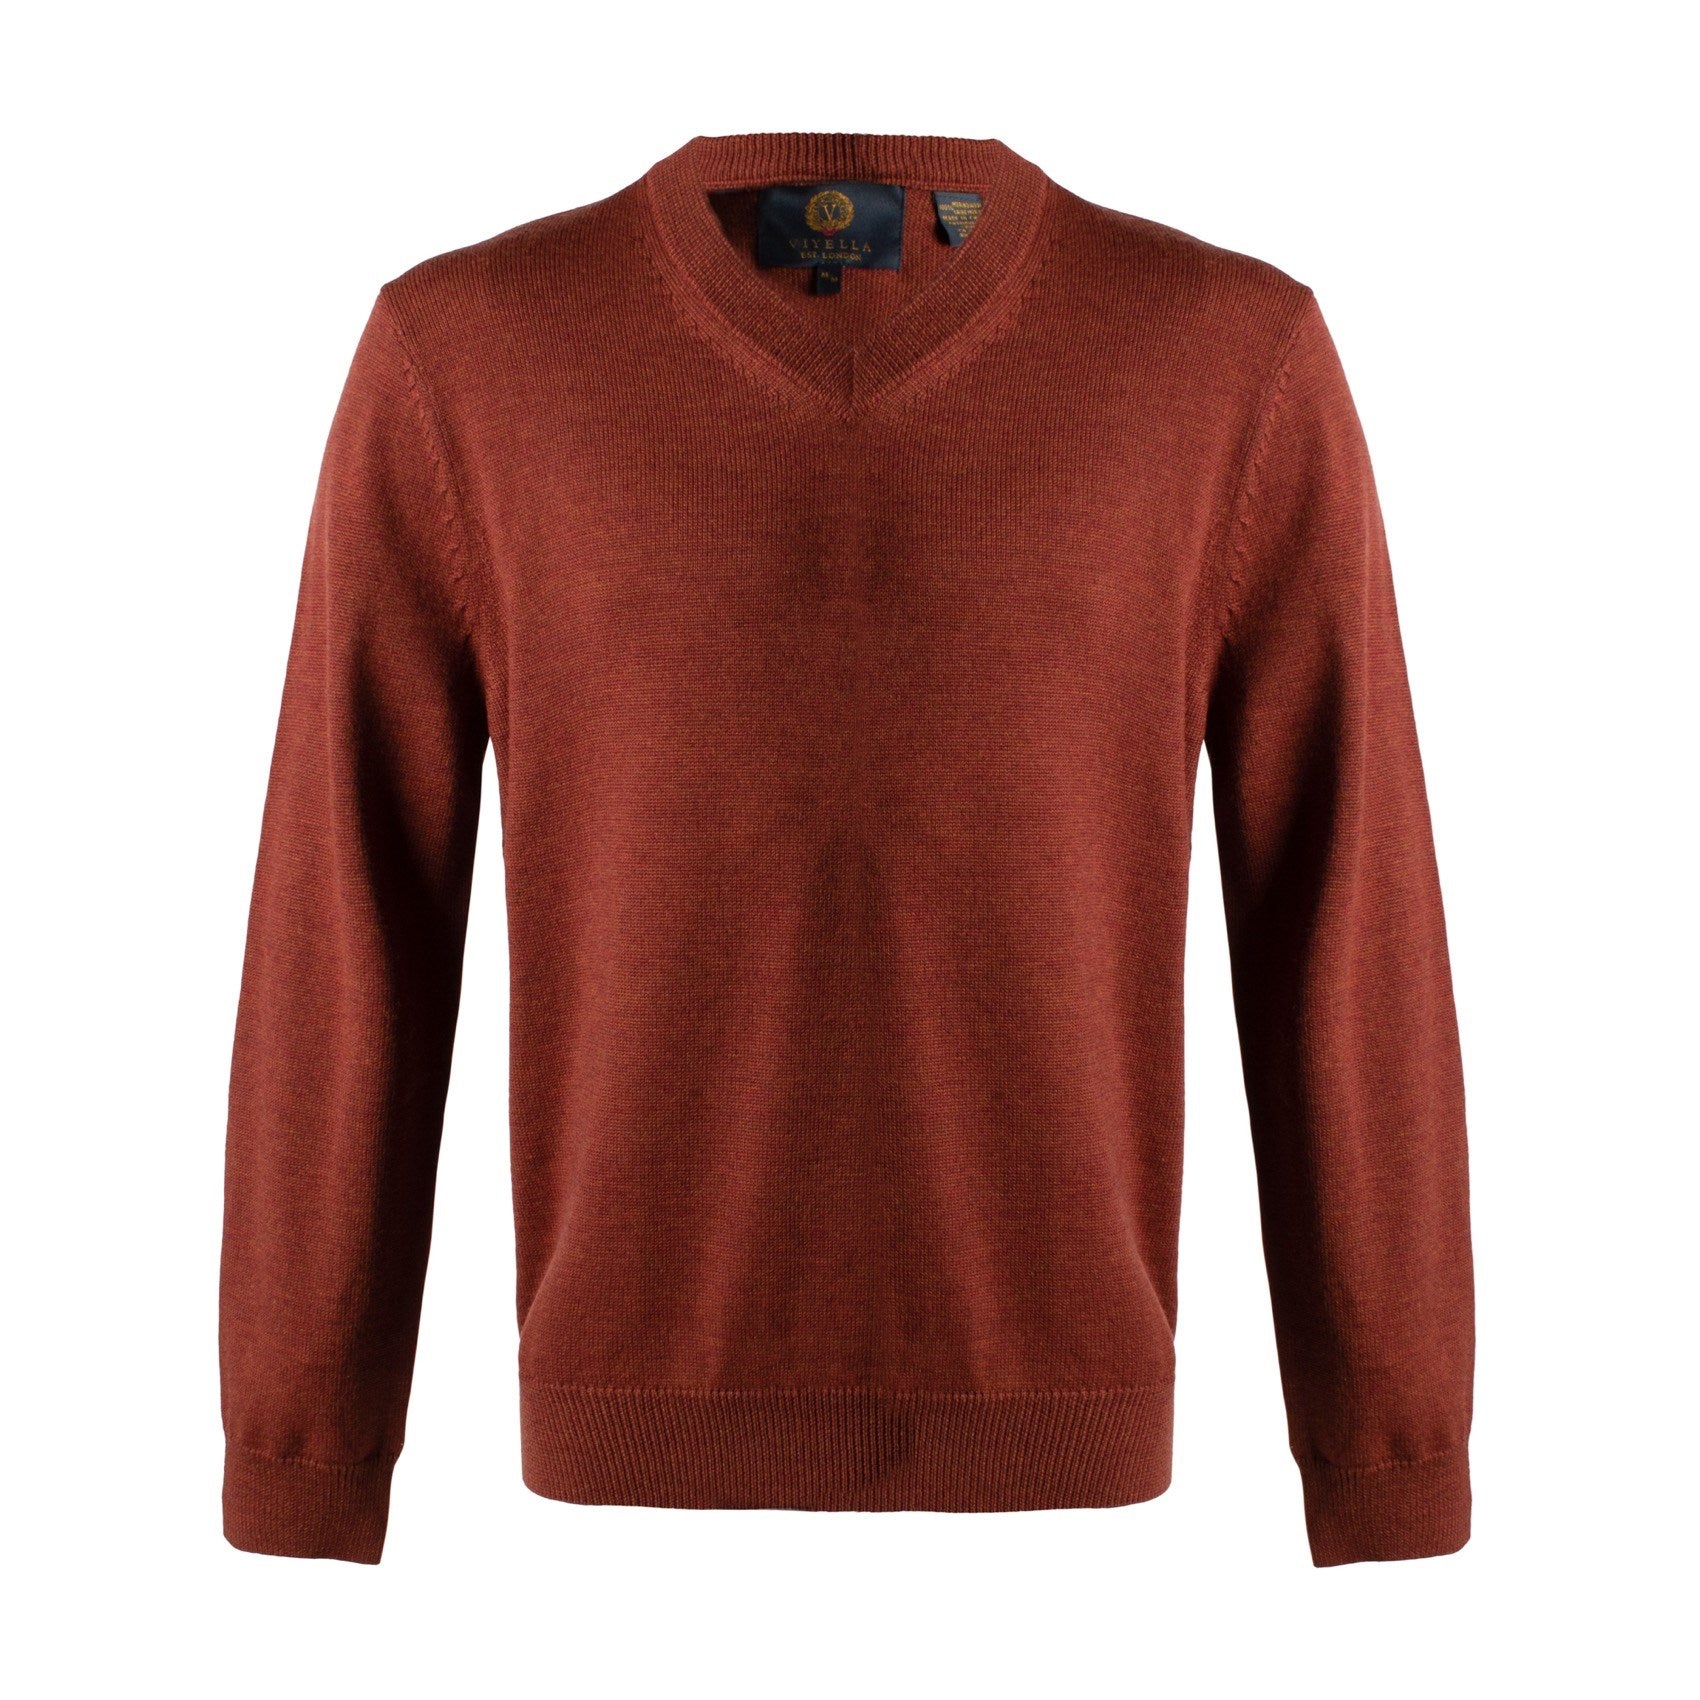 Extra Fine 'Zegna Baruffa' Merino Wool V-Neck Sweater in Rust by Viyella